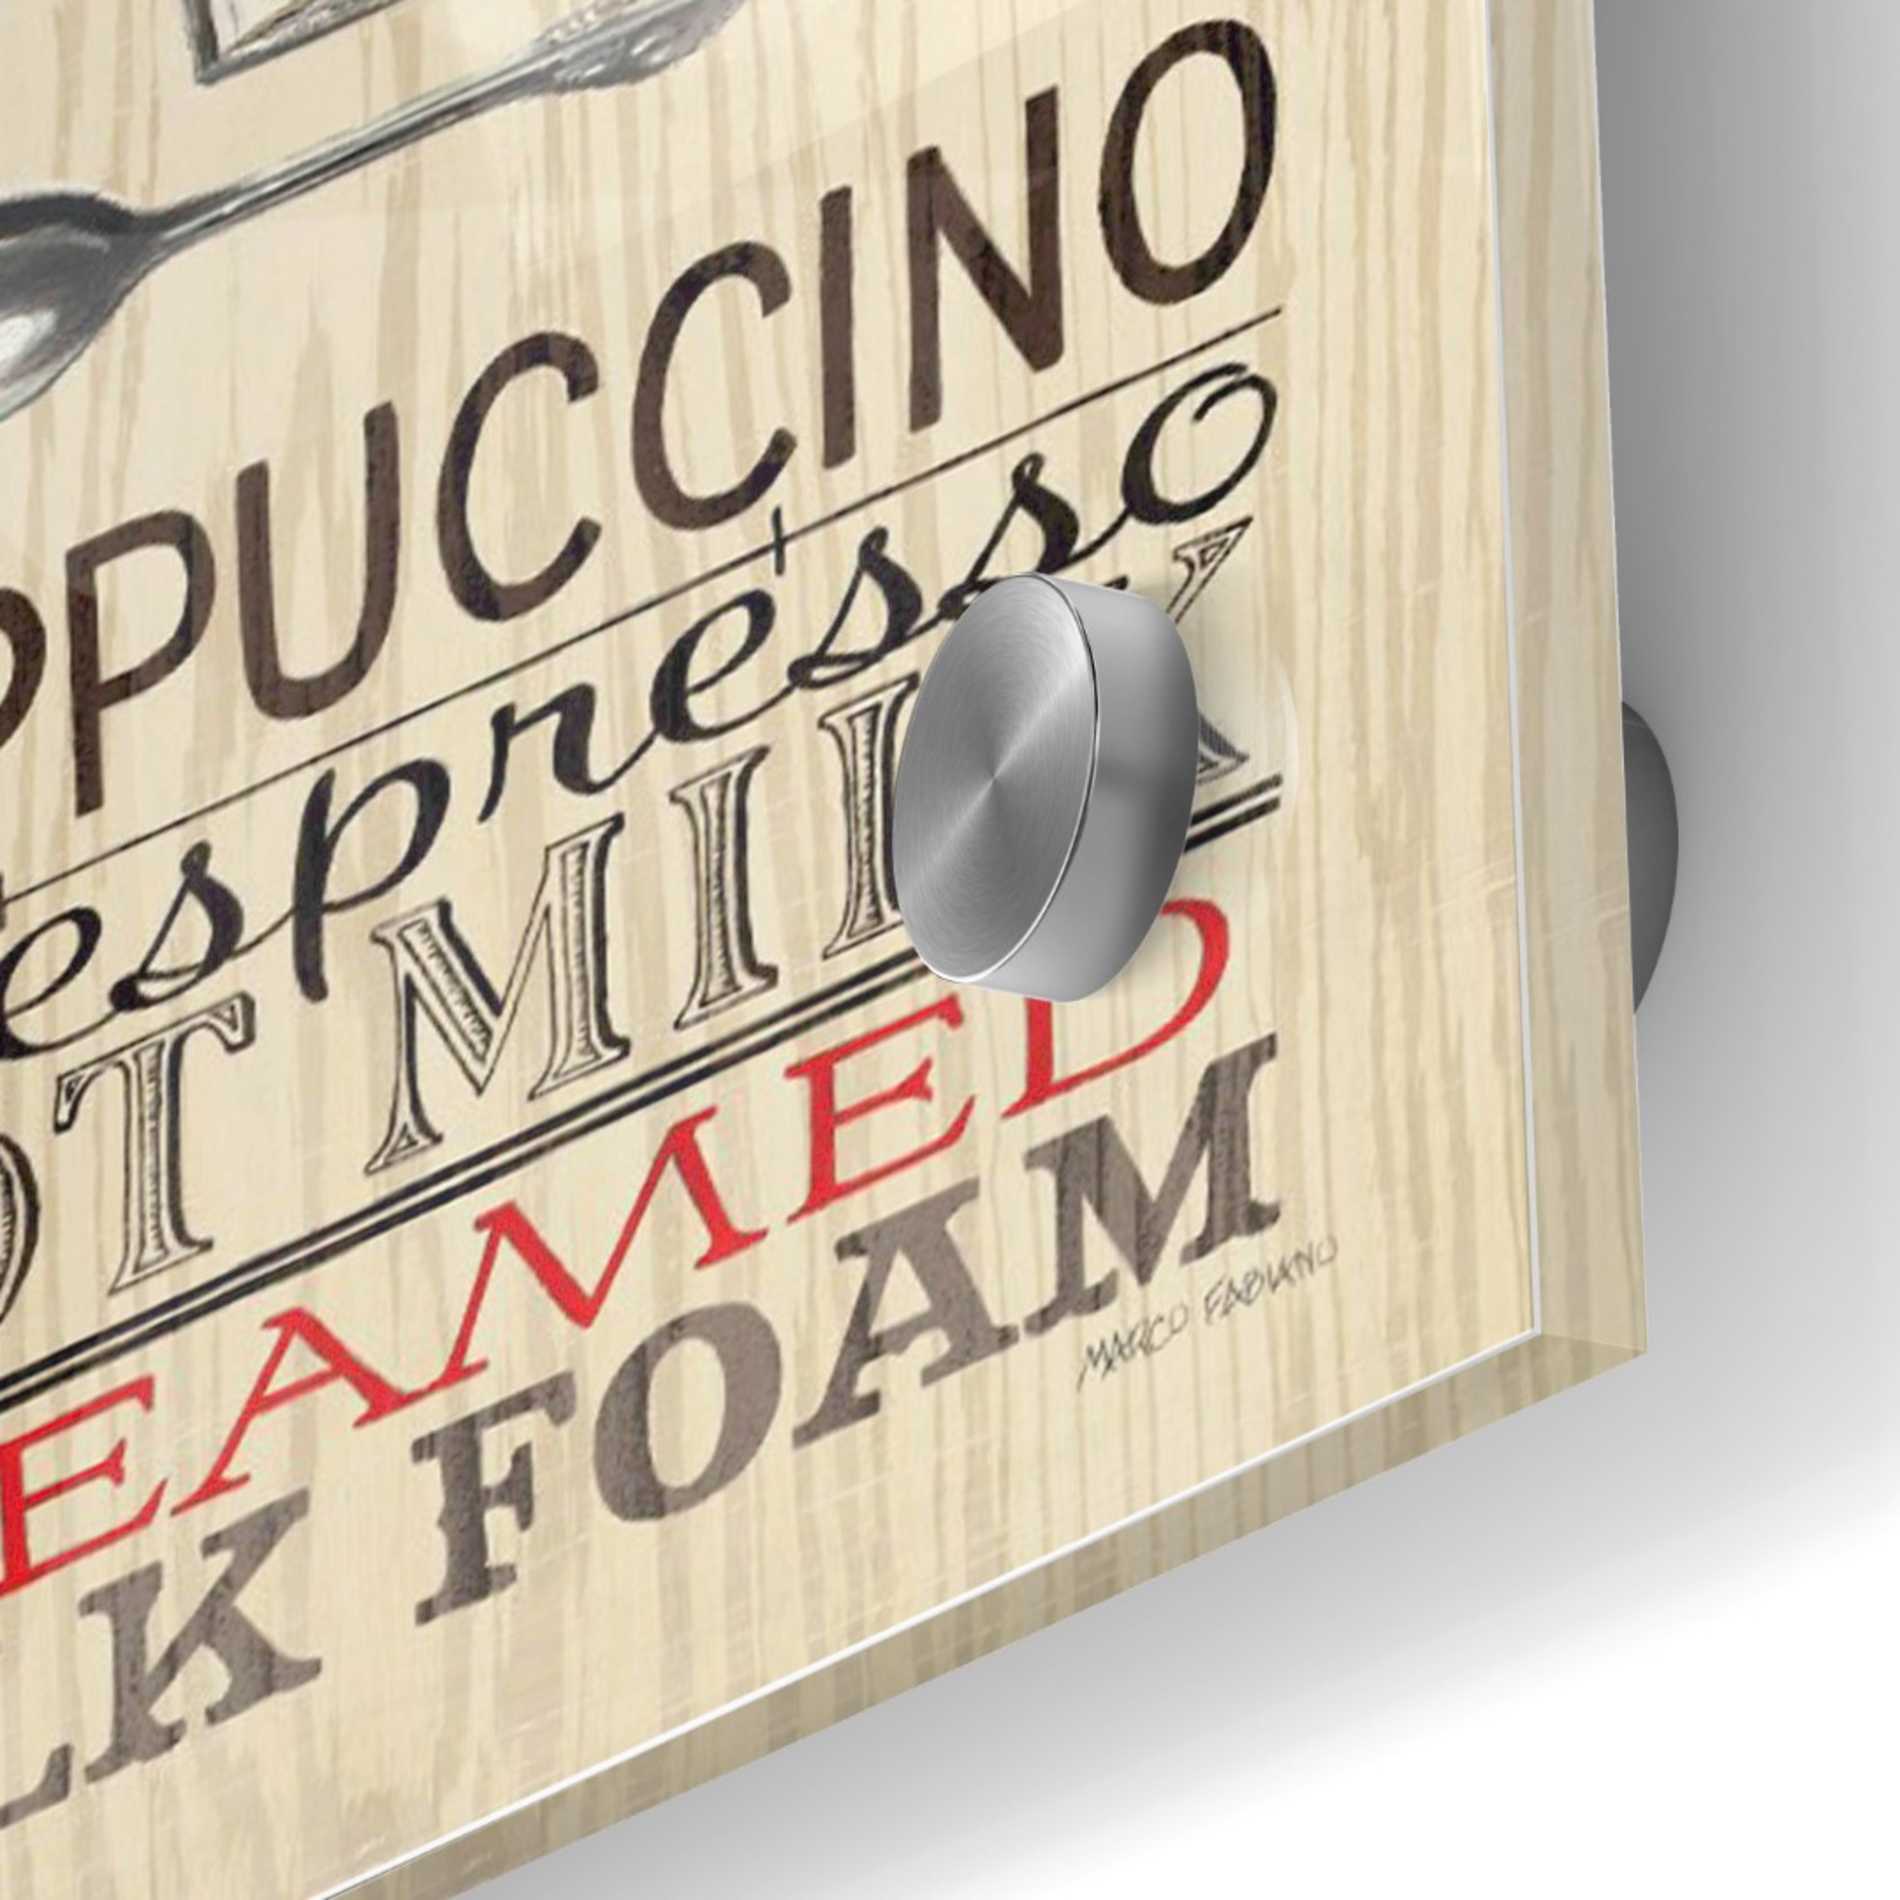 Epic Art 'Cappuccino' by Marco Fabiano, Acrylic Glass Wall Art